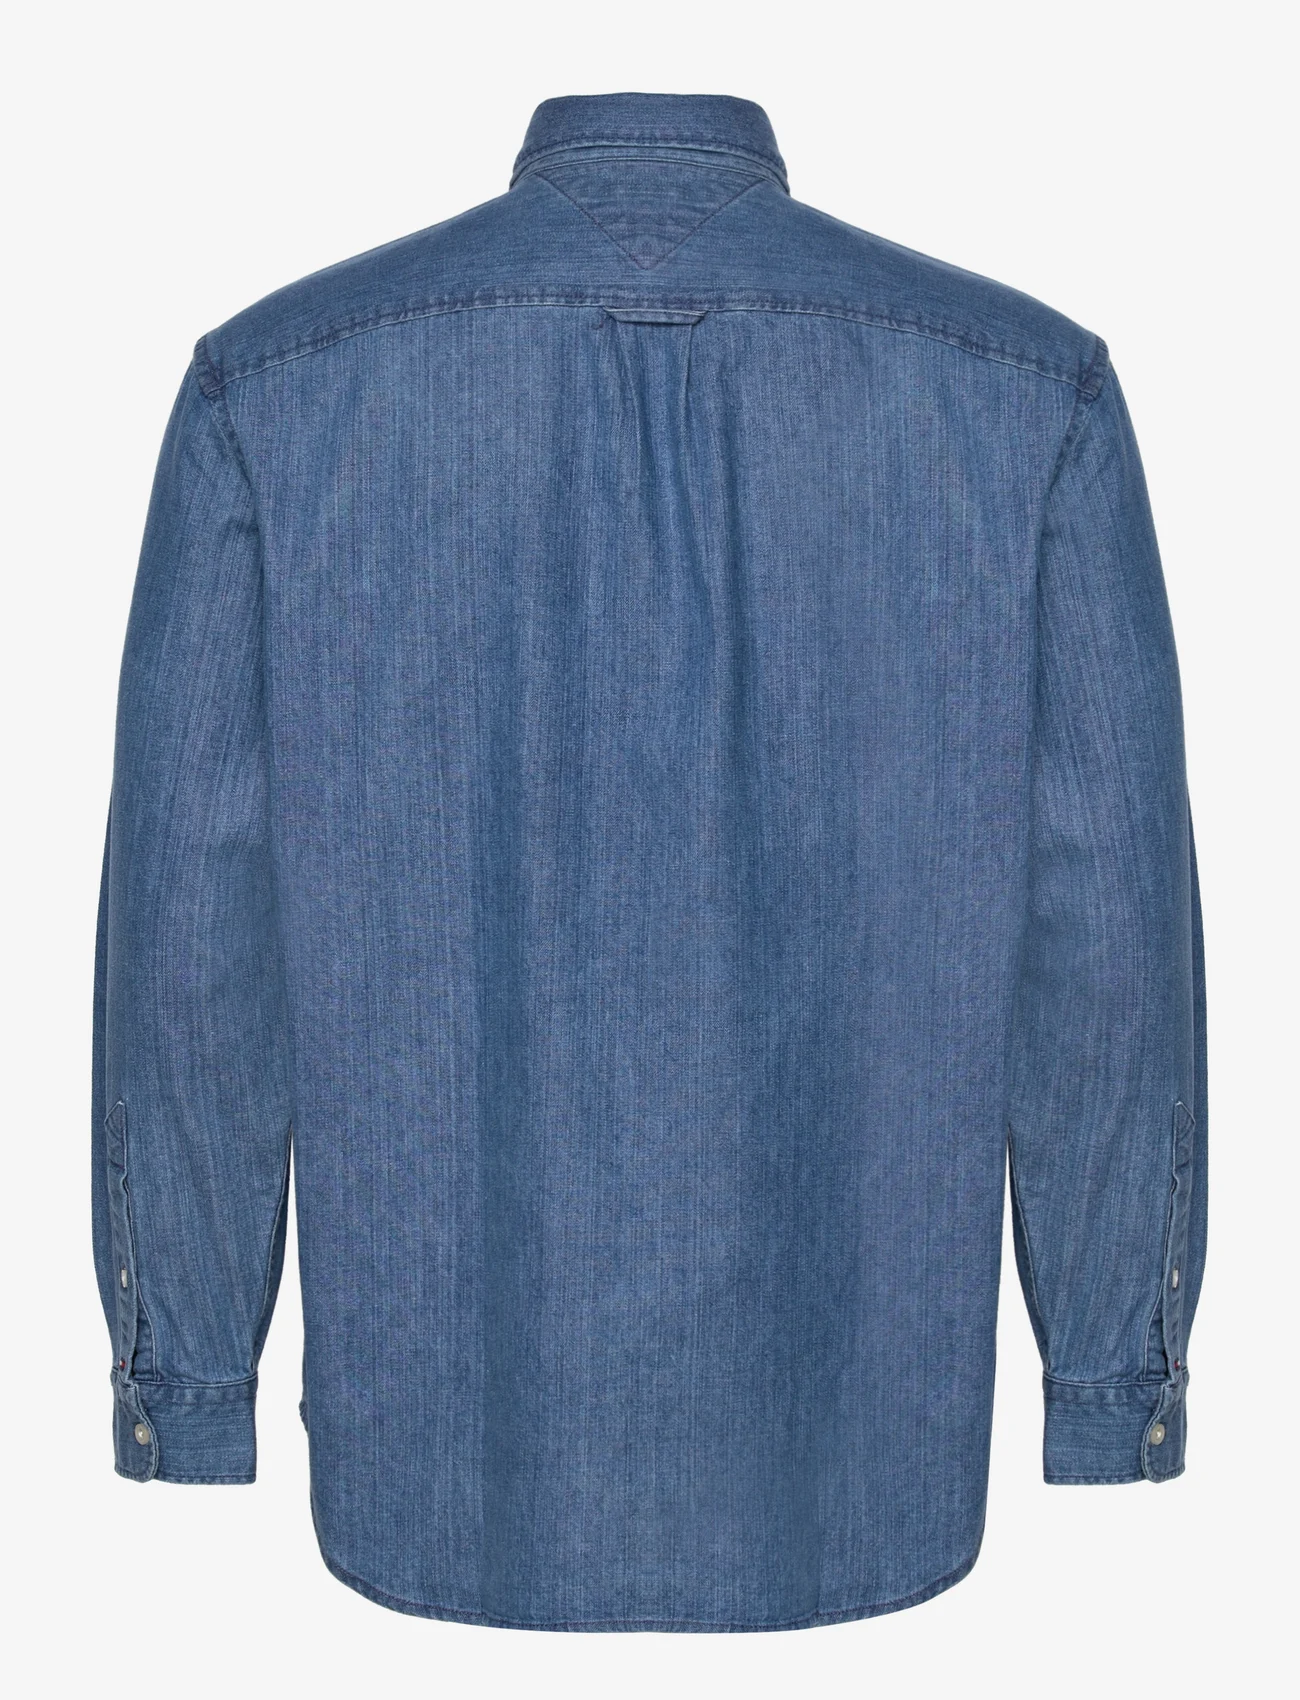 Tommy Hilfiger - DENIM SHIRT - casual shirts - medium indigo - 1